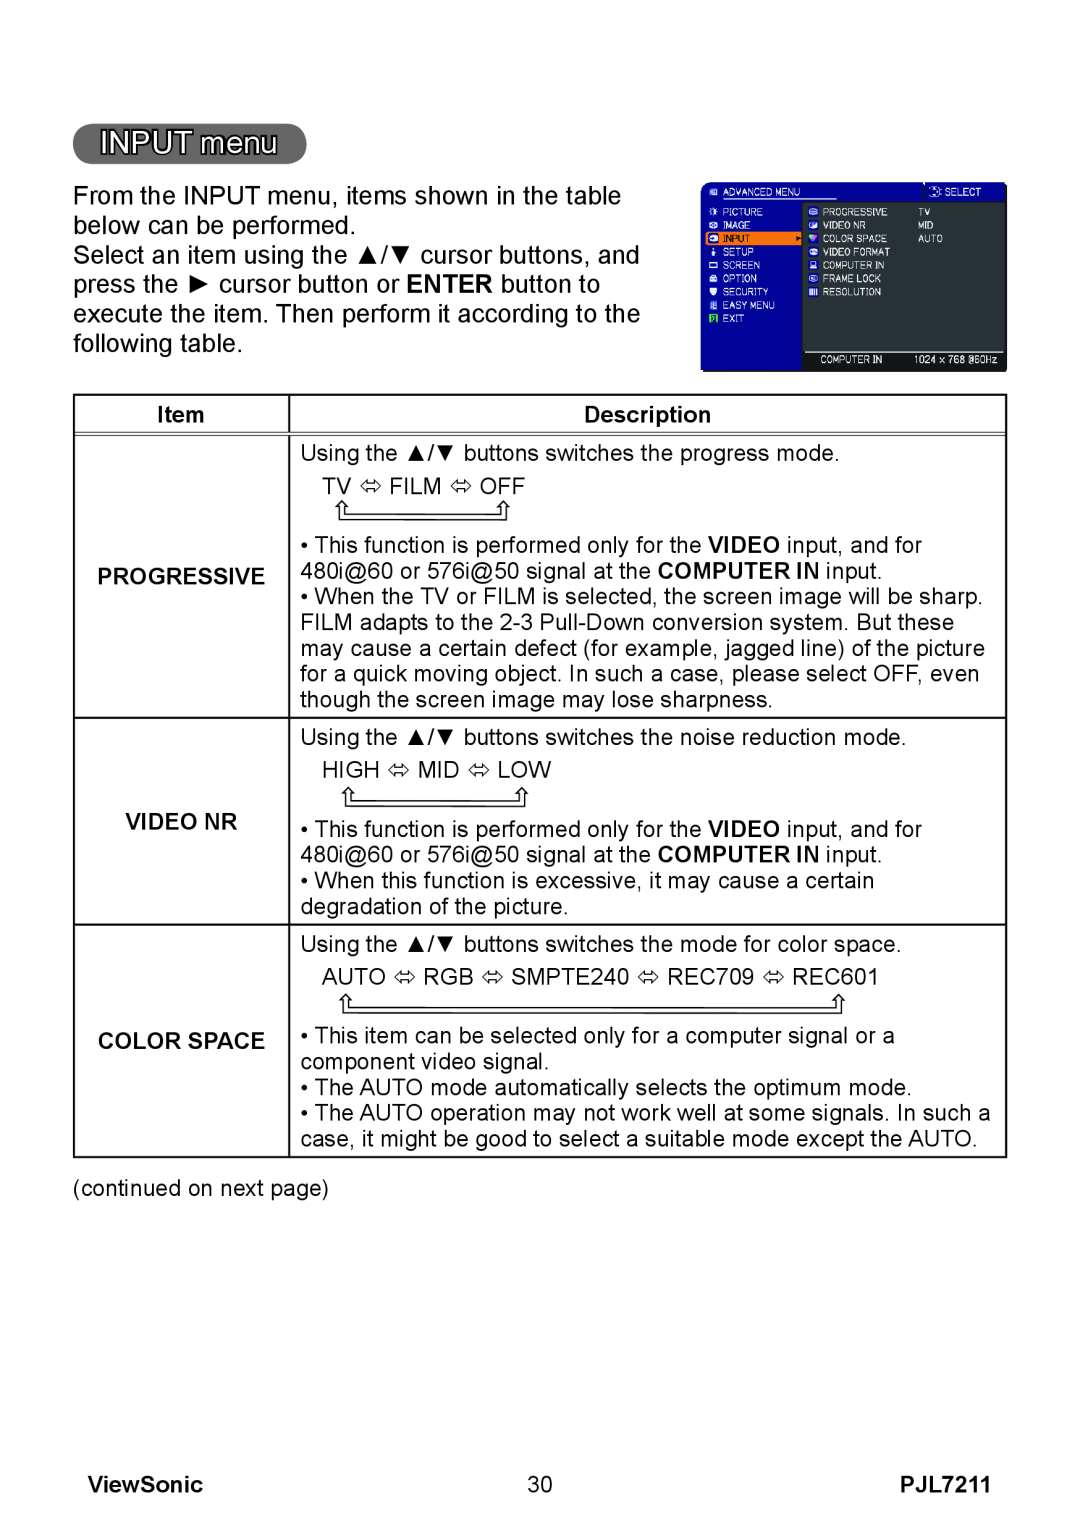 ViewSonic PJL7211 manual INPUTmenu, Item, Description, Progressive, Video Nr, Color Space, ViewSonic 